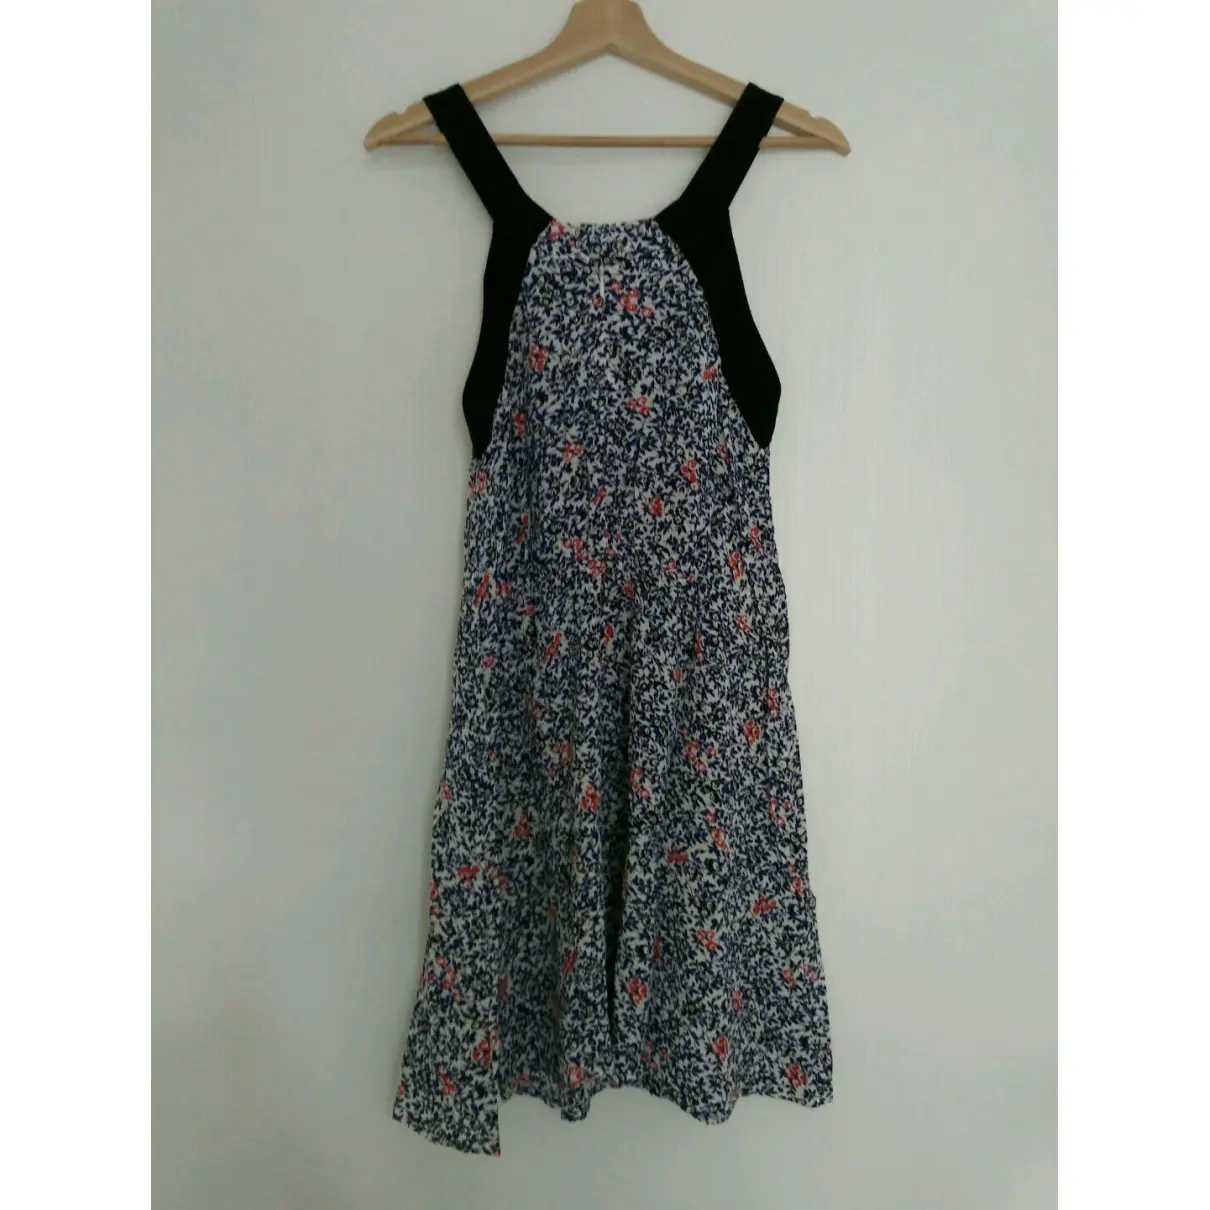 Swildens Mini dress for sale